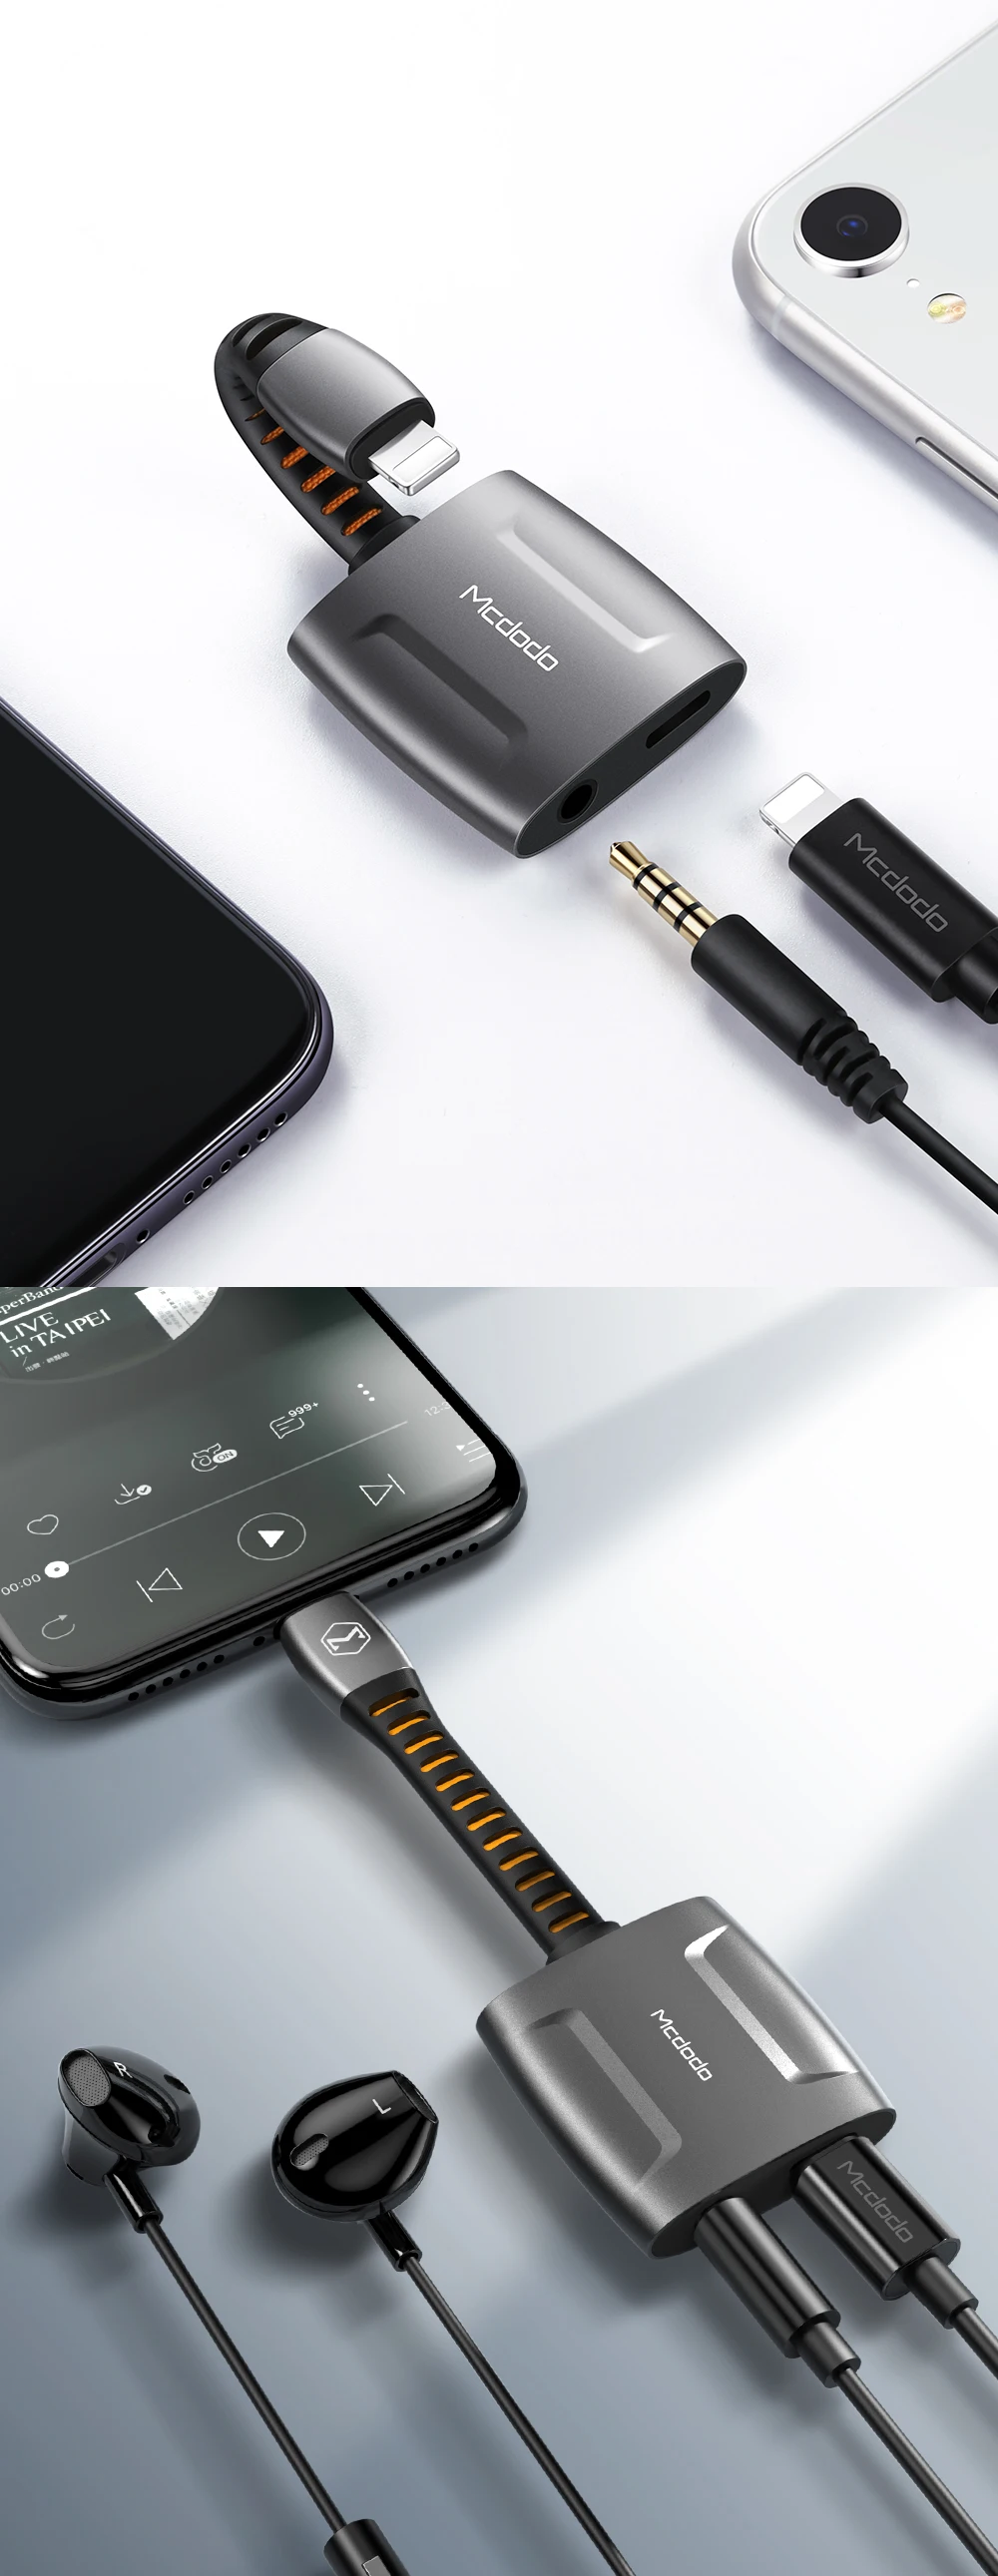 Mcdodo Aux аудио кабель адаптер вызова на 3,5 мм разъем аудио наушники конвертер для IPhone зарядное устройство адаптер OTG